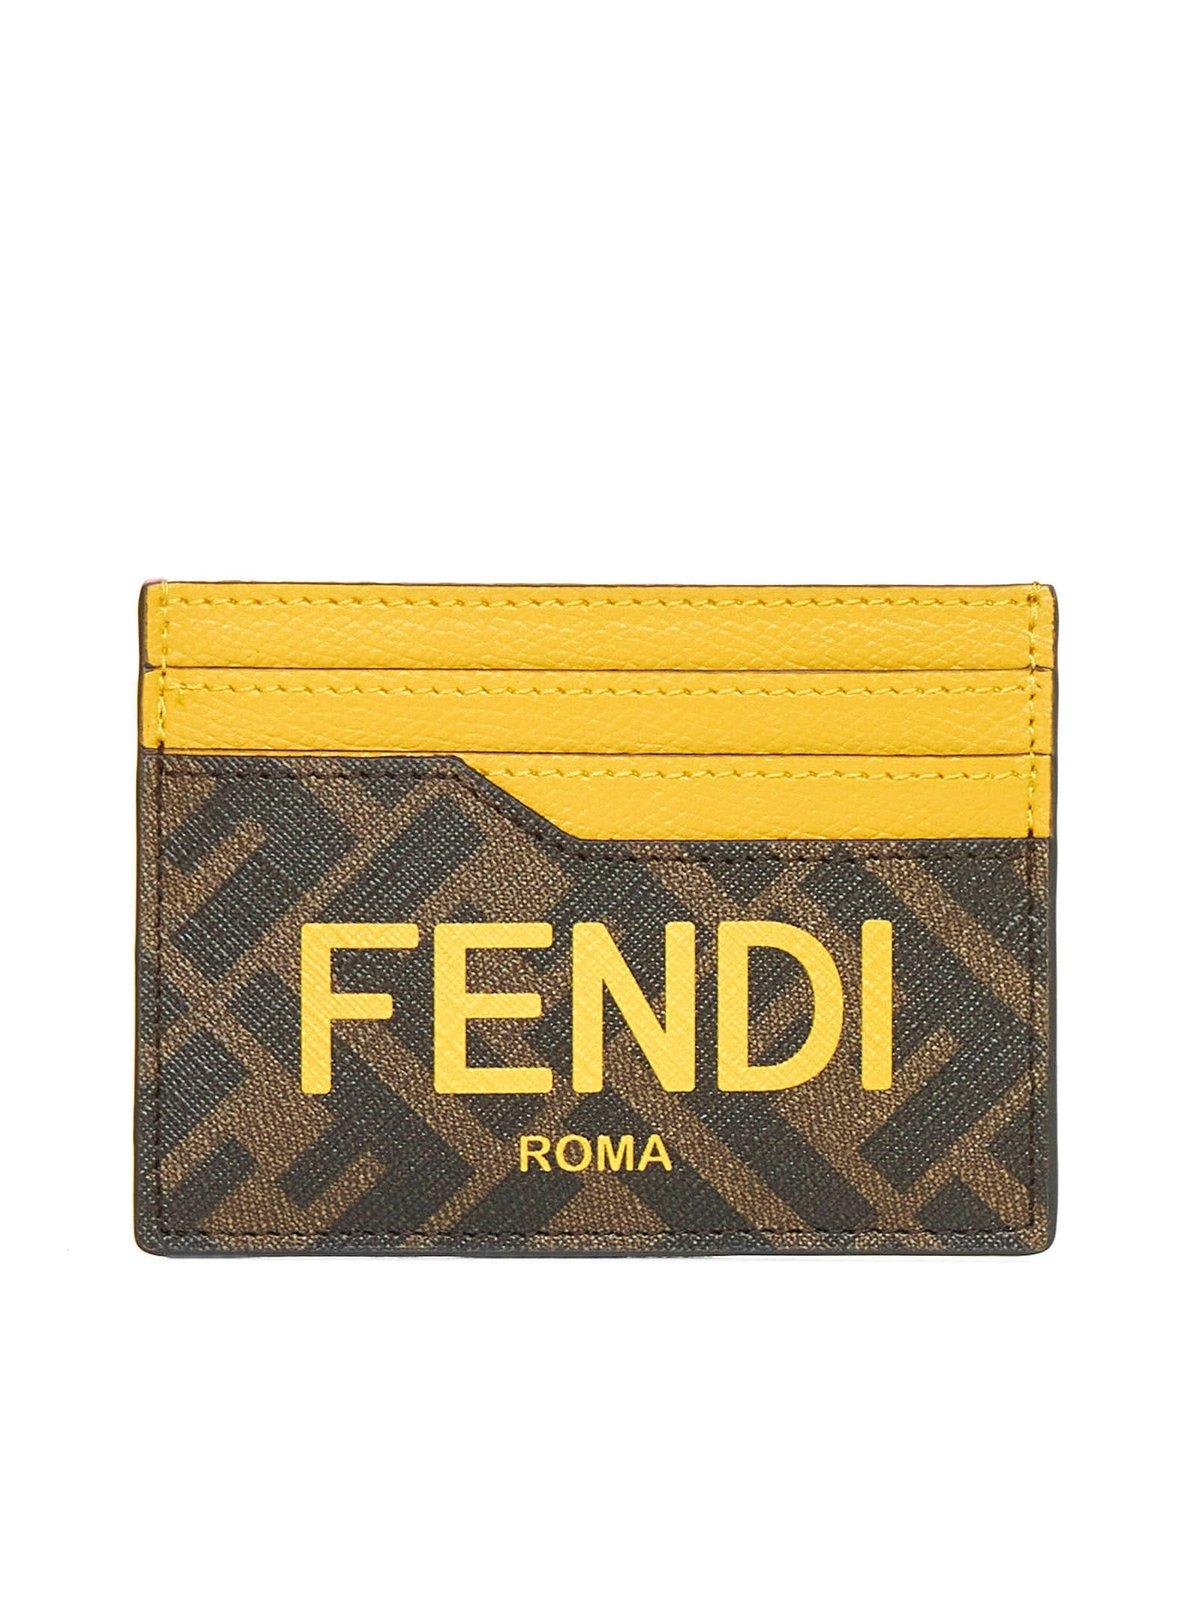 Fendi Logo Printed Card Holder